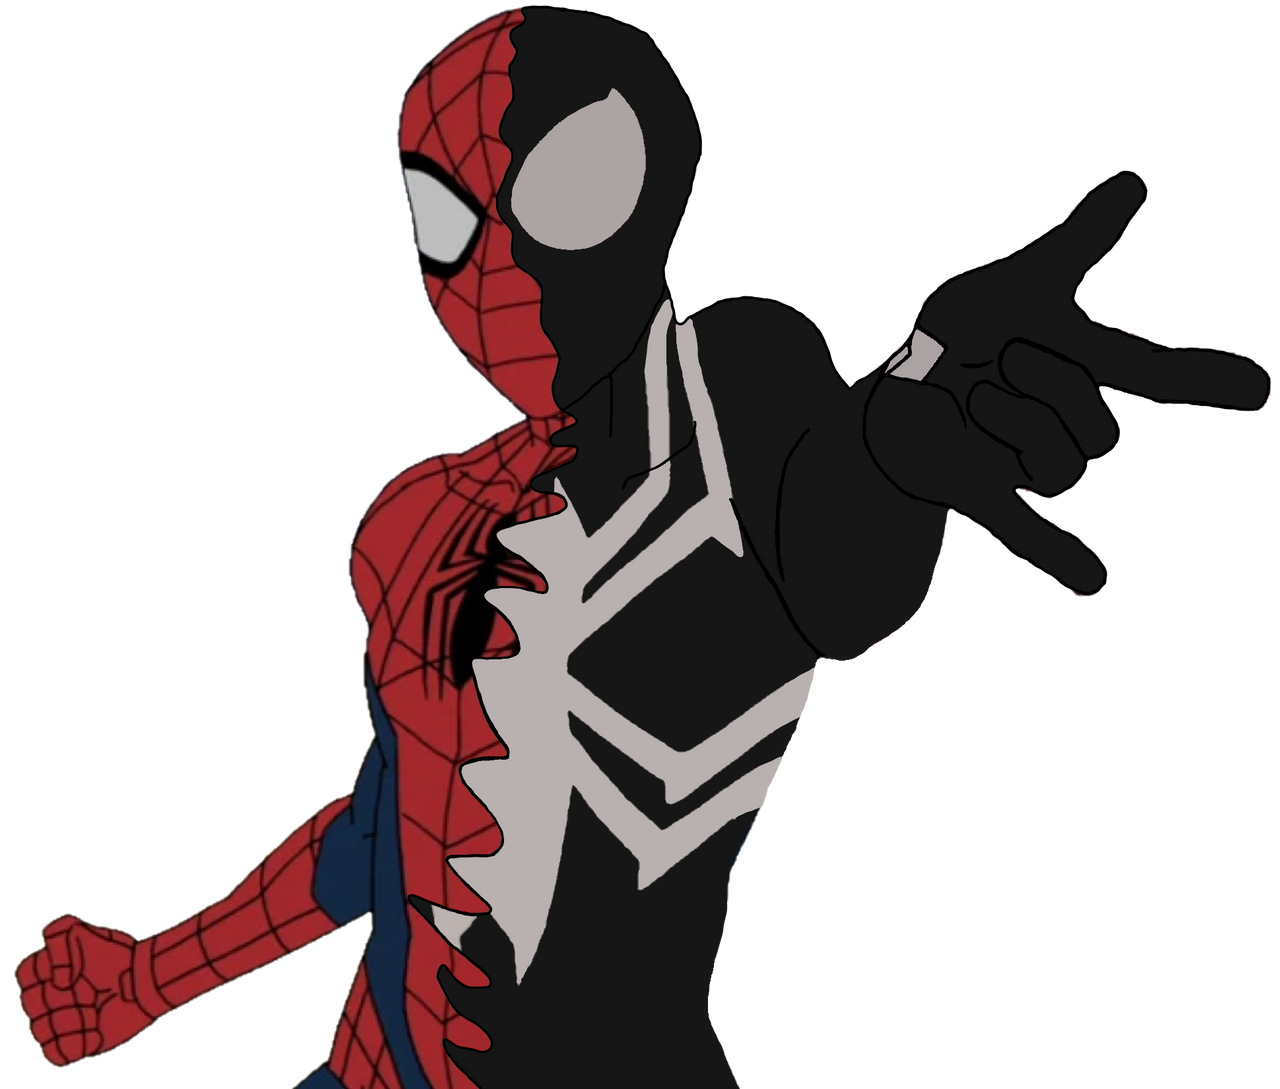 Spider Man: Homecoming (2017) Spidey PNG #4 by williansantos26 on DeviantArt